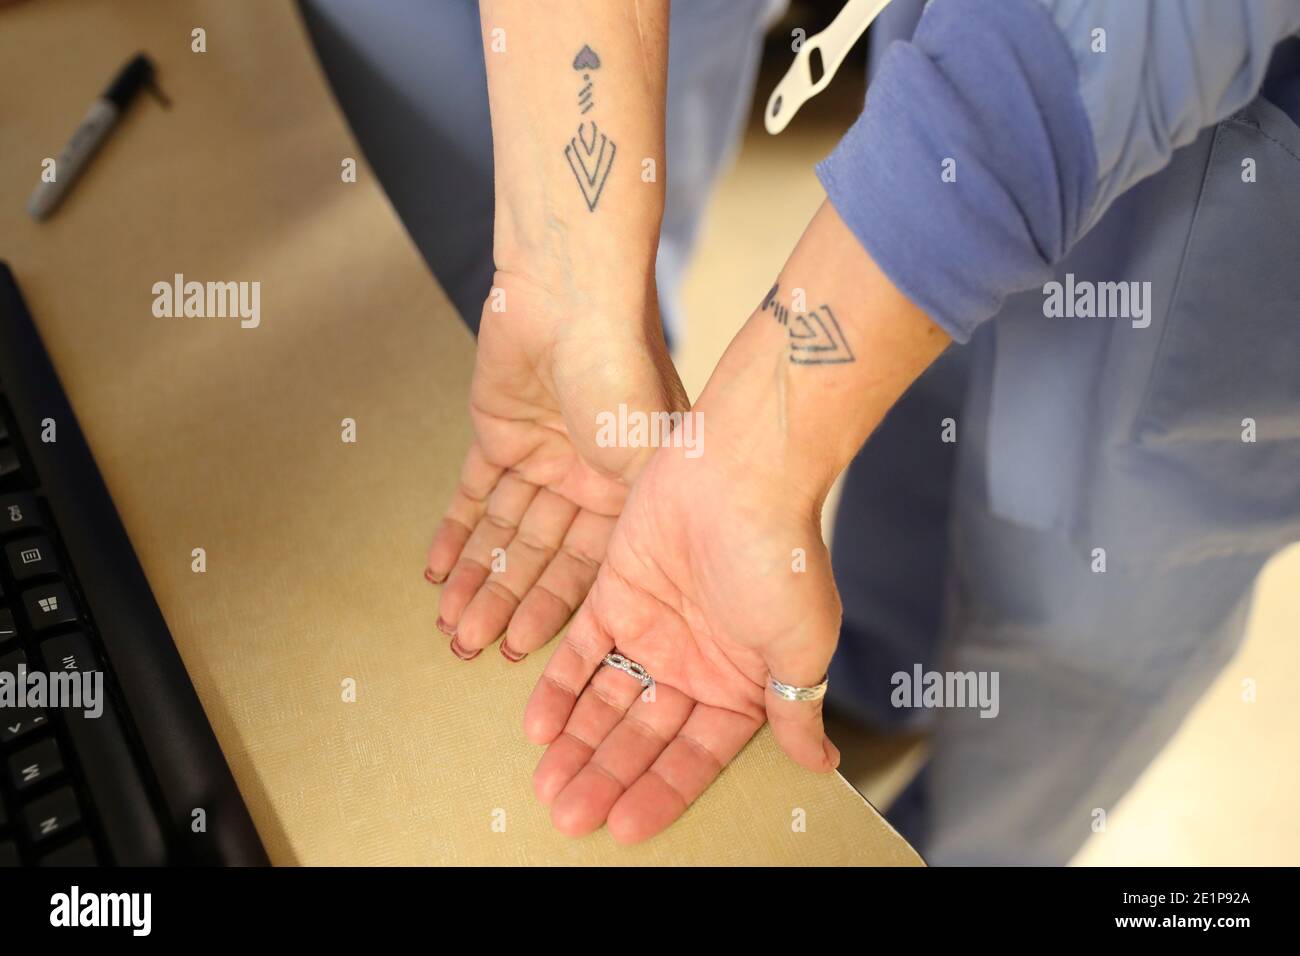 Icu nurses united states hi-res stock photography and images - Alamy